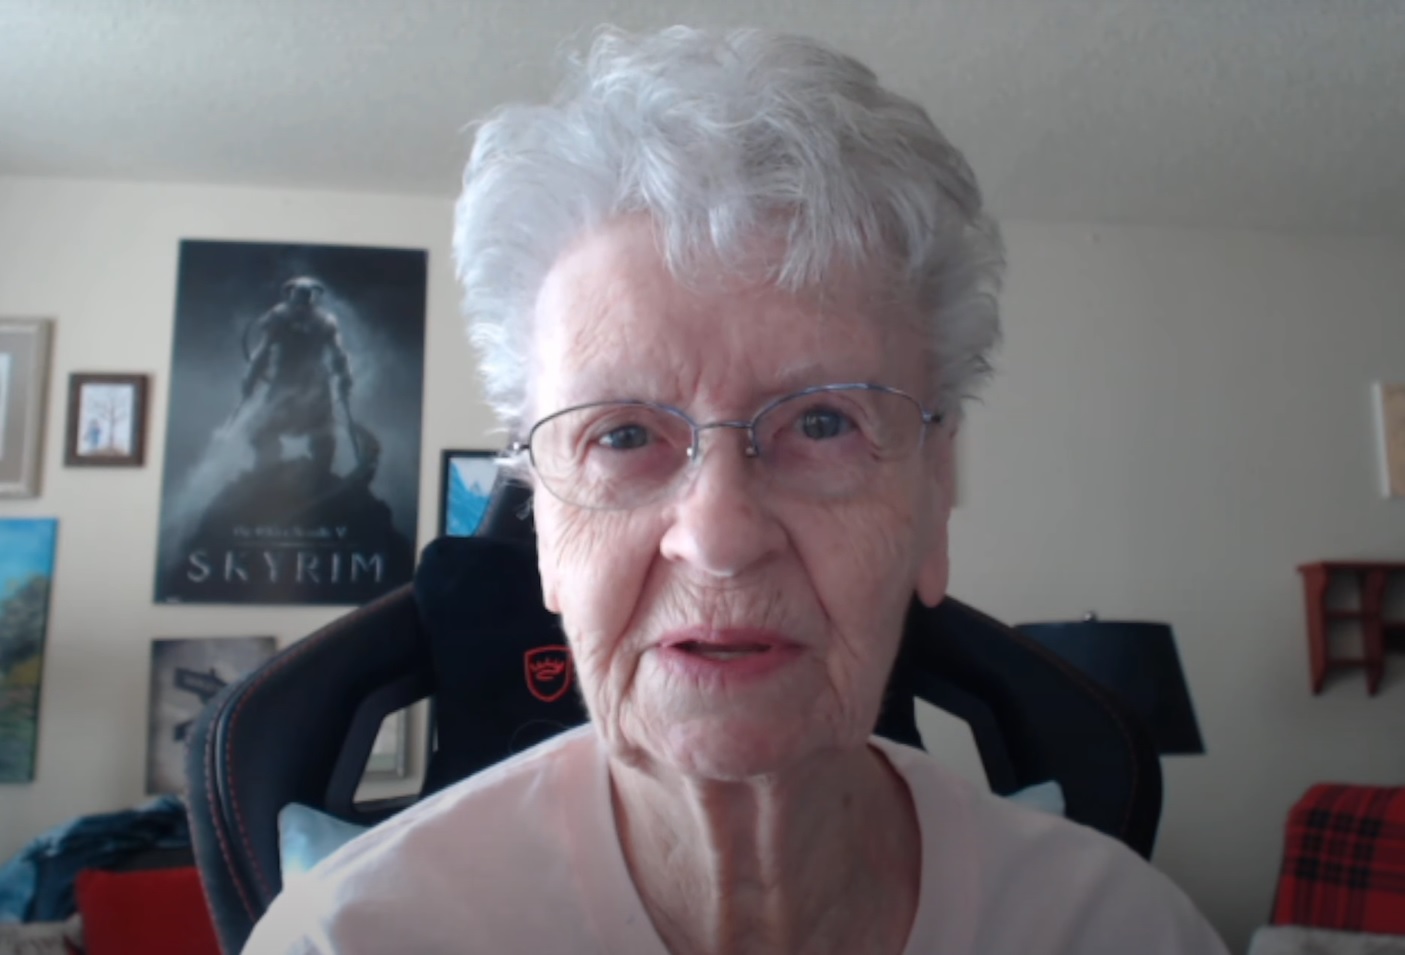 Starfield Skyrim Grandma: A YouTuber, Shirley Curry, also known as Skyrim Grandma, speaking into the camera